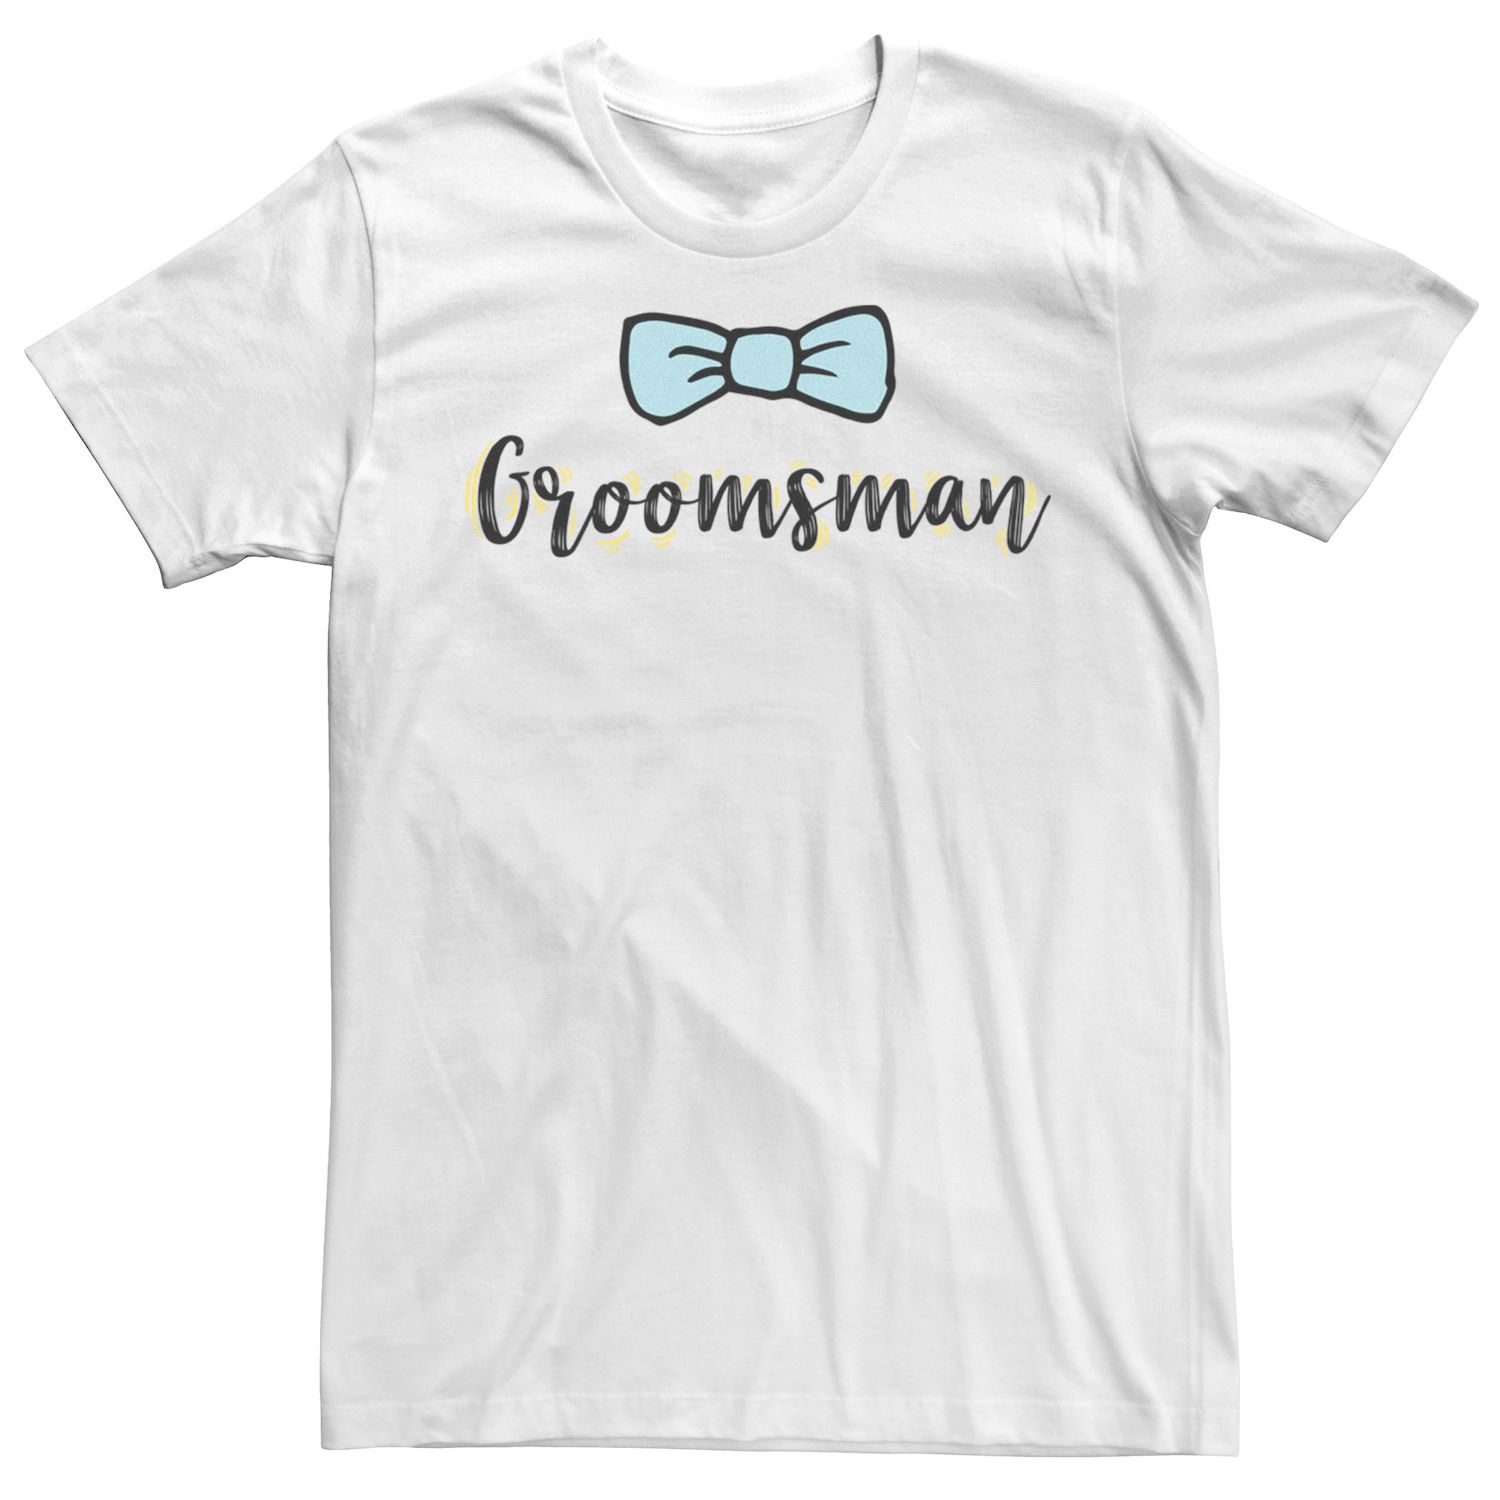 Мужская футболка с галстуком-бабочкой для жениха Licensed Character